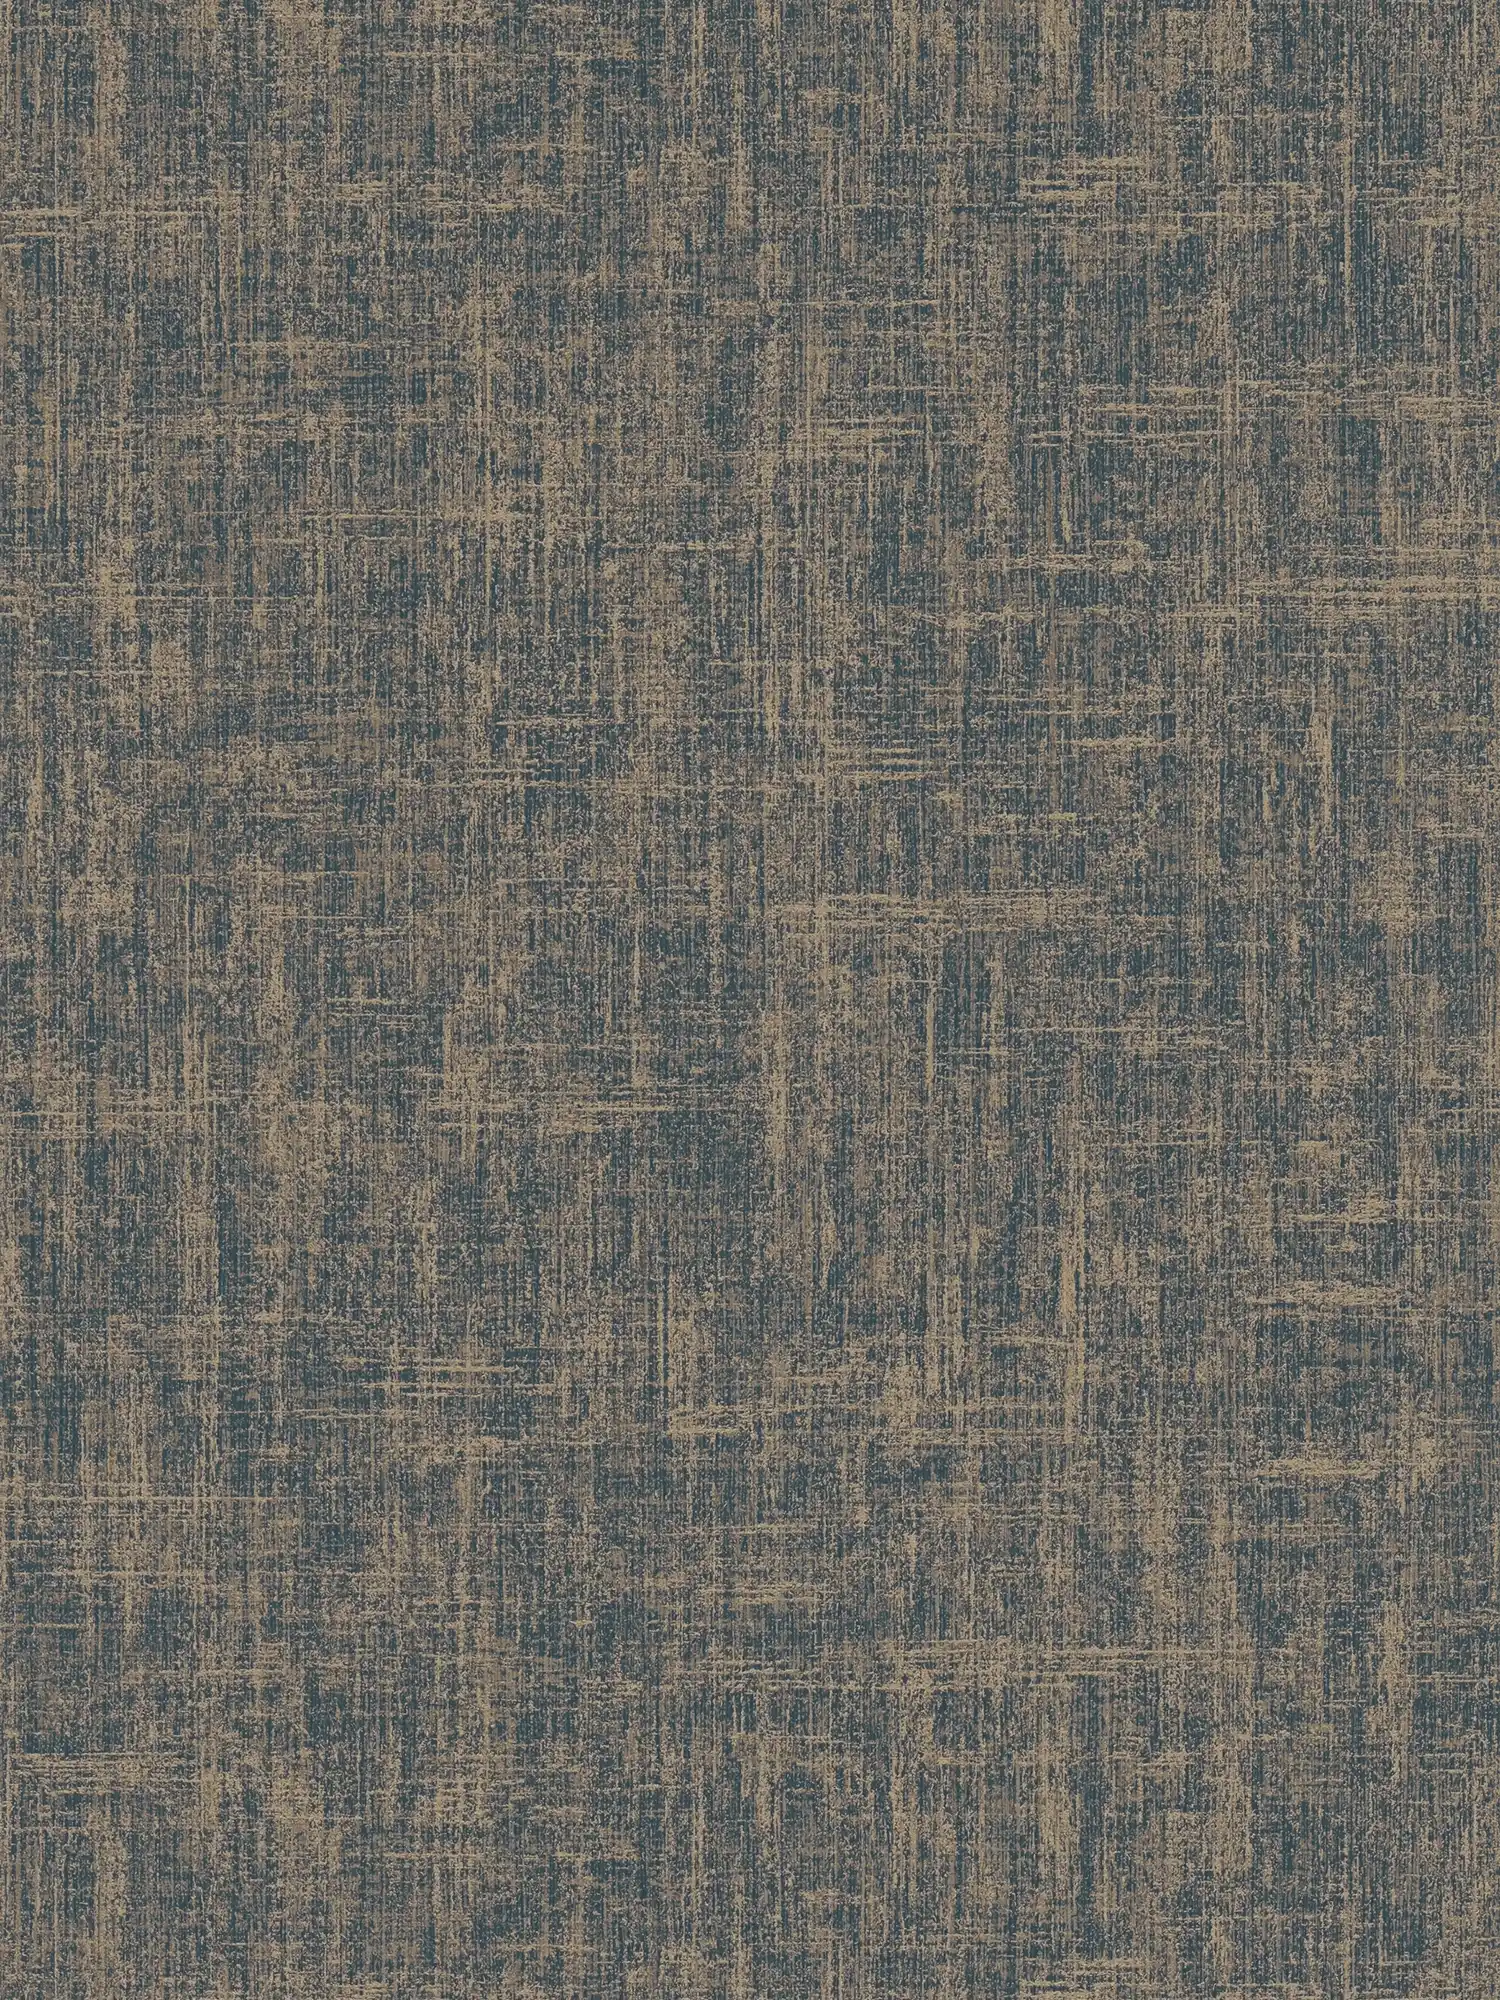 Non-woven wallpaper with mottled metallic effect
